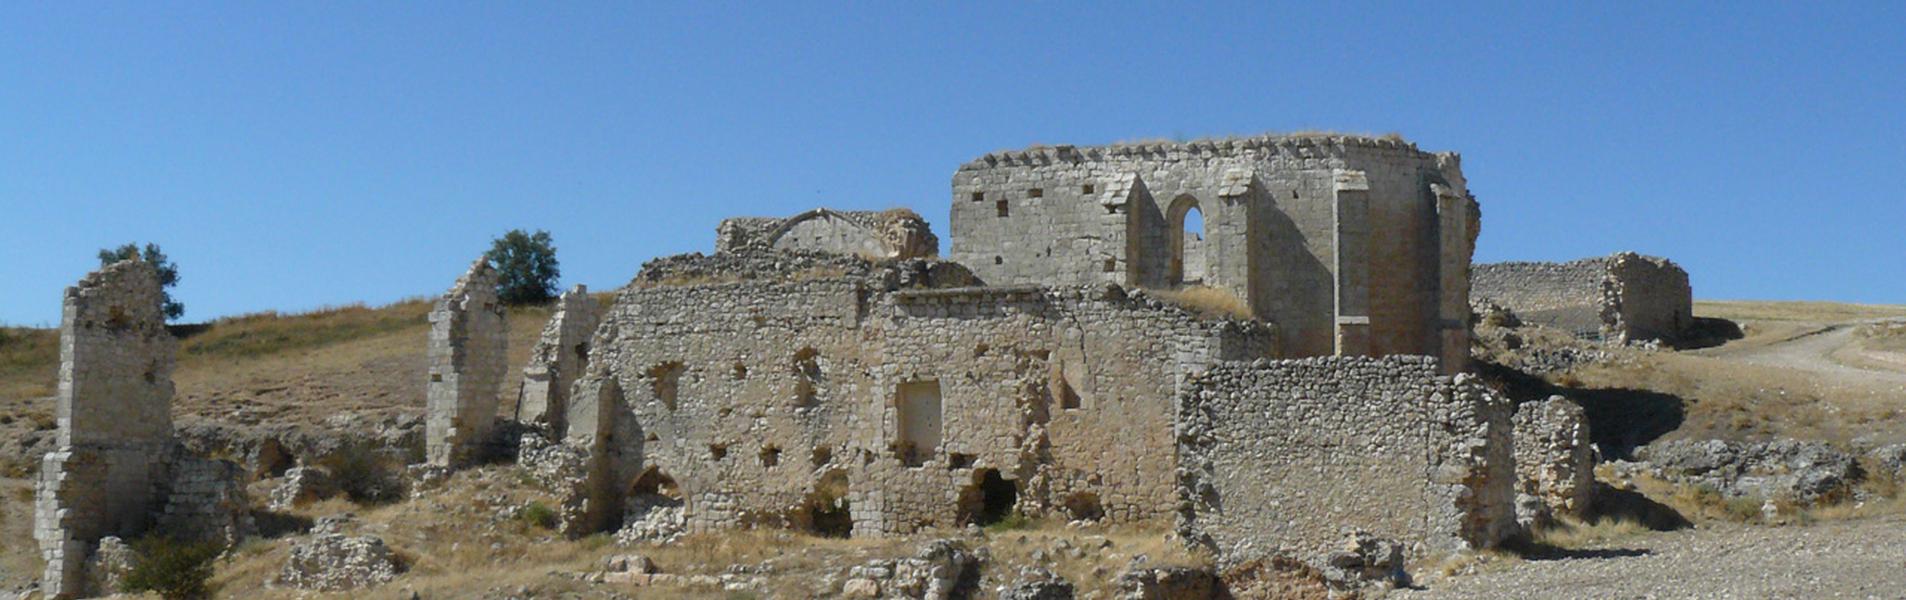 Convento antiguo